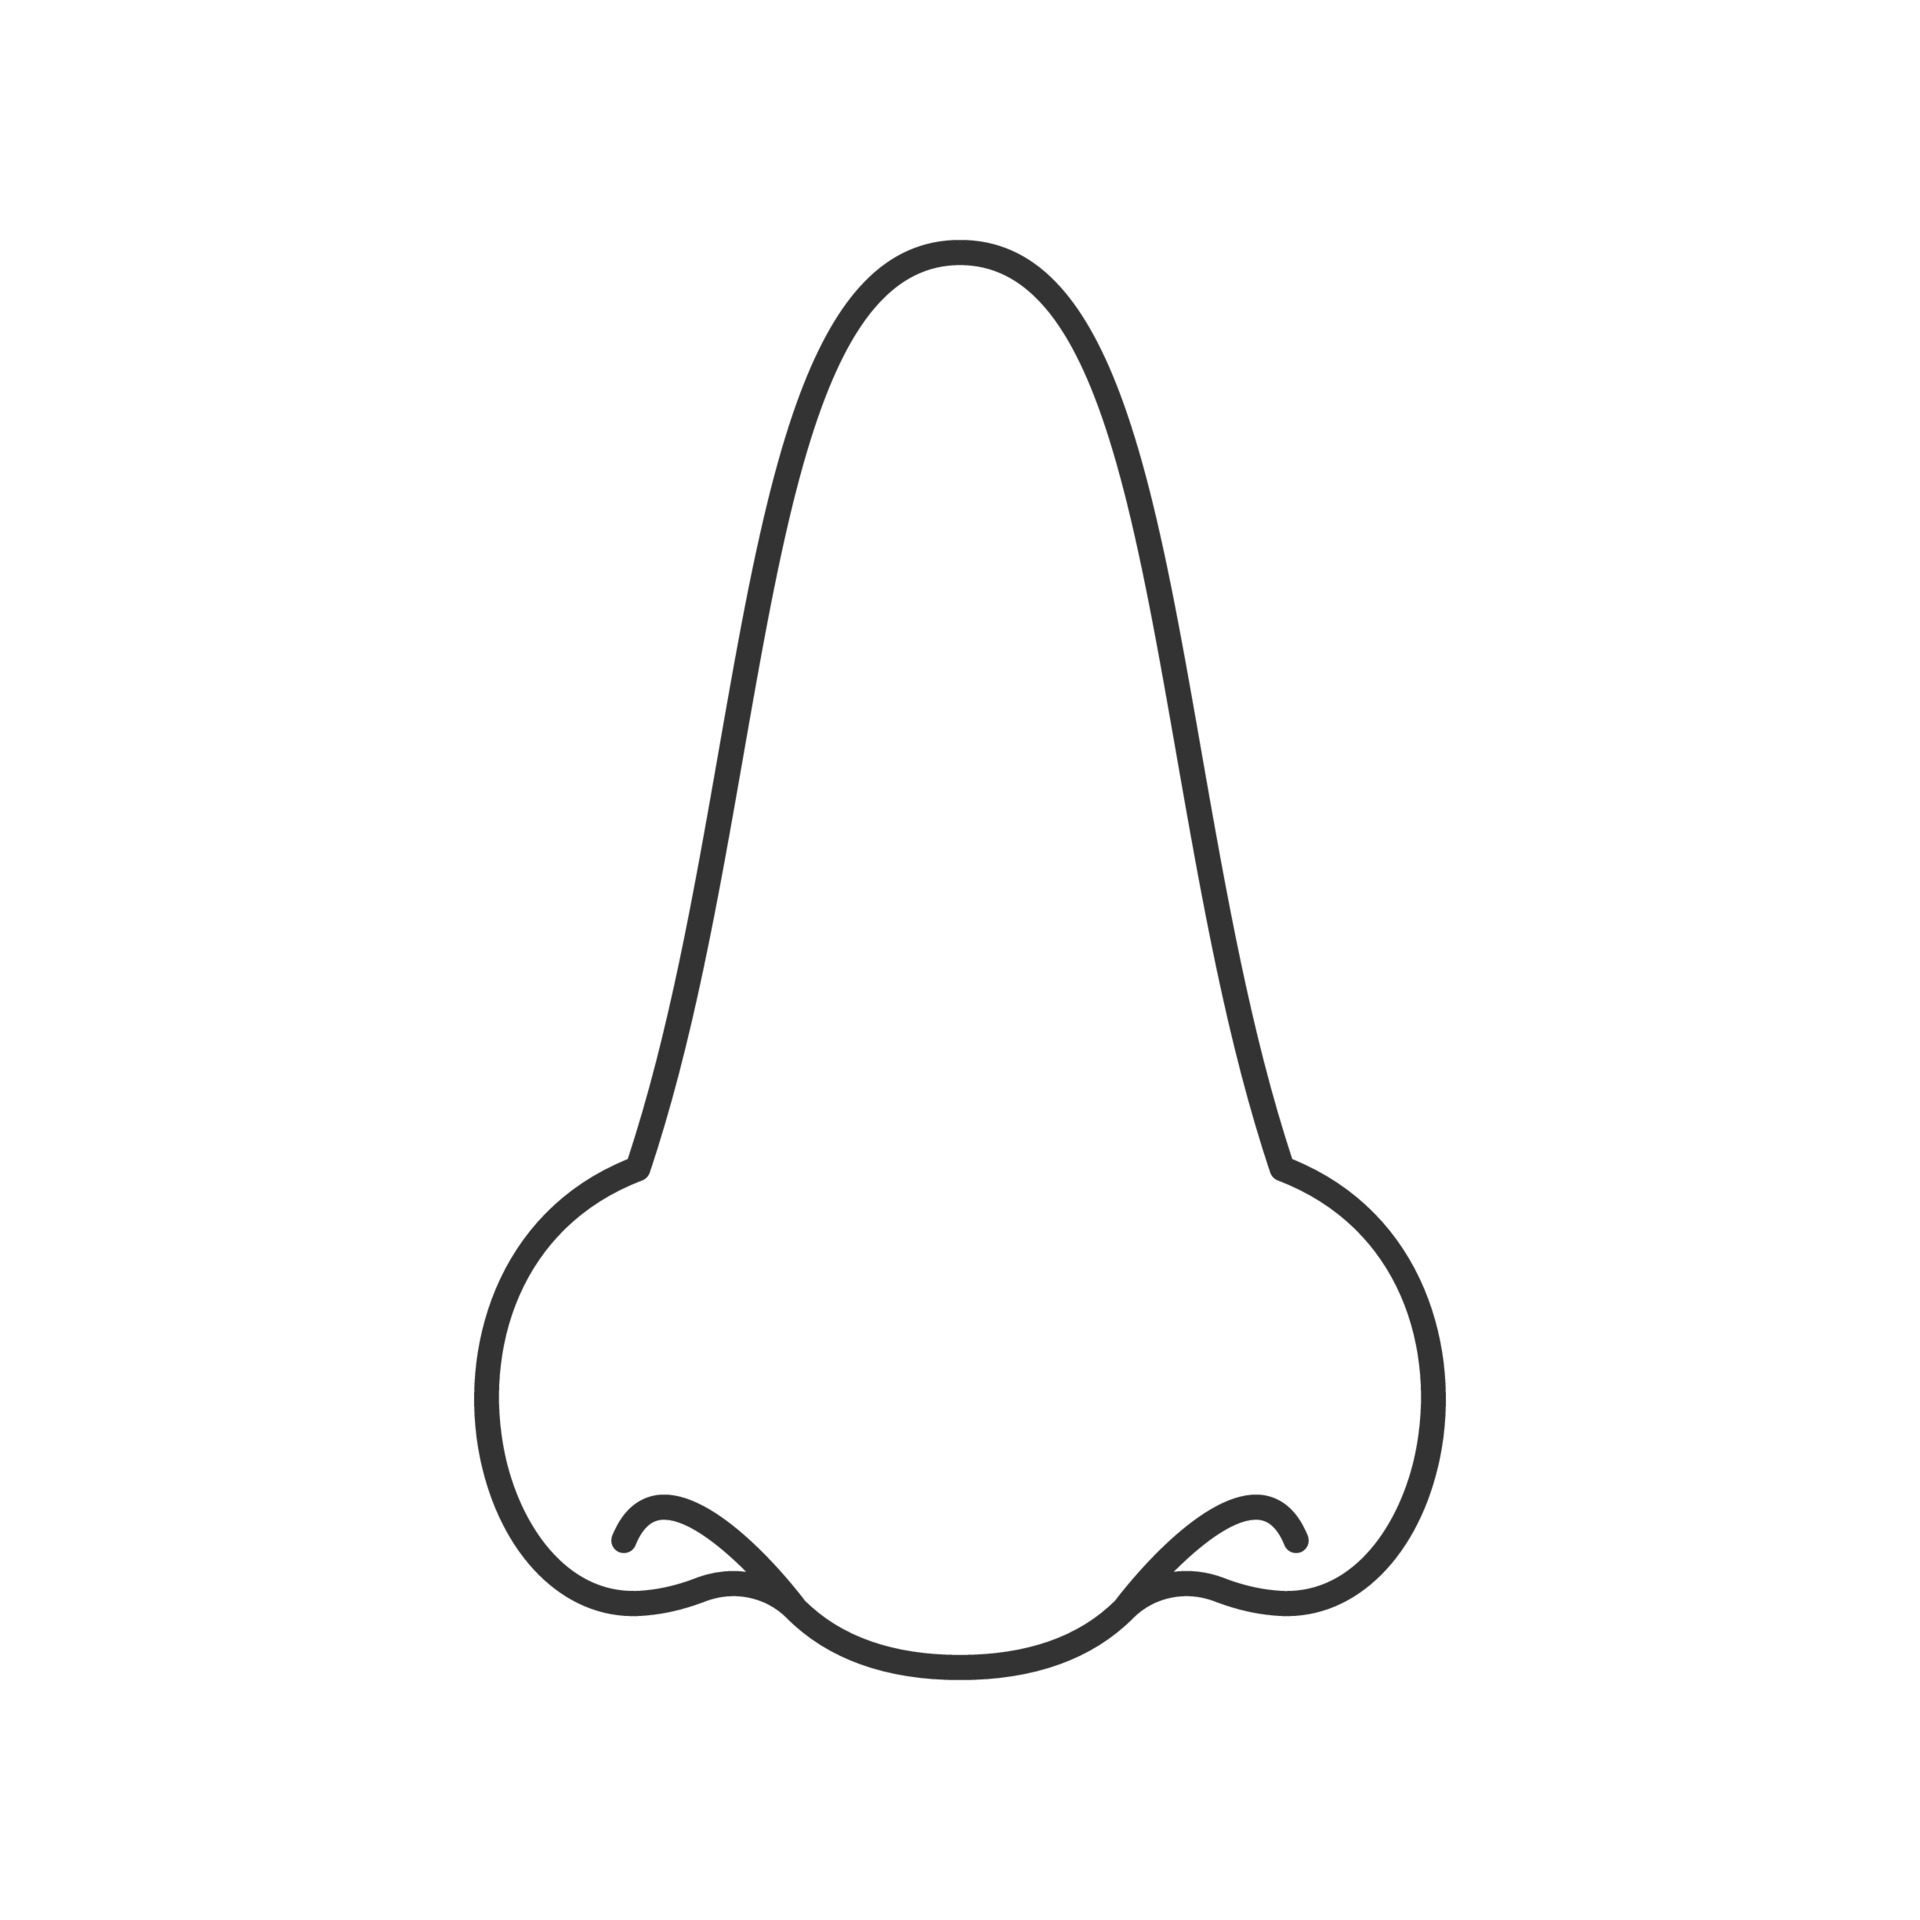 nose-linear-icon-thin-line-illustration-contour-symbol-vector